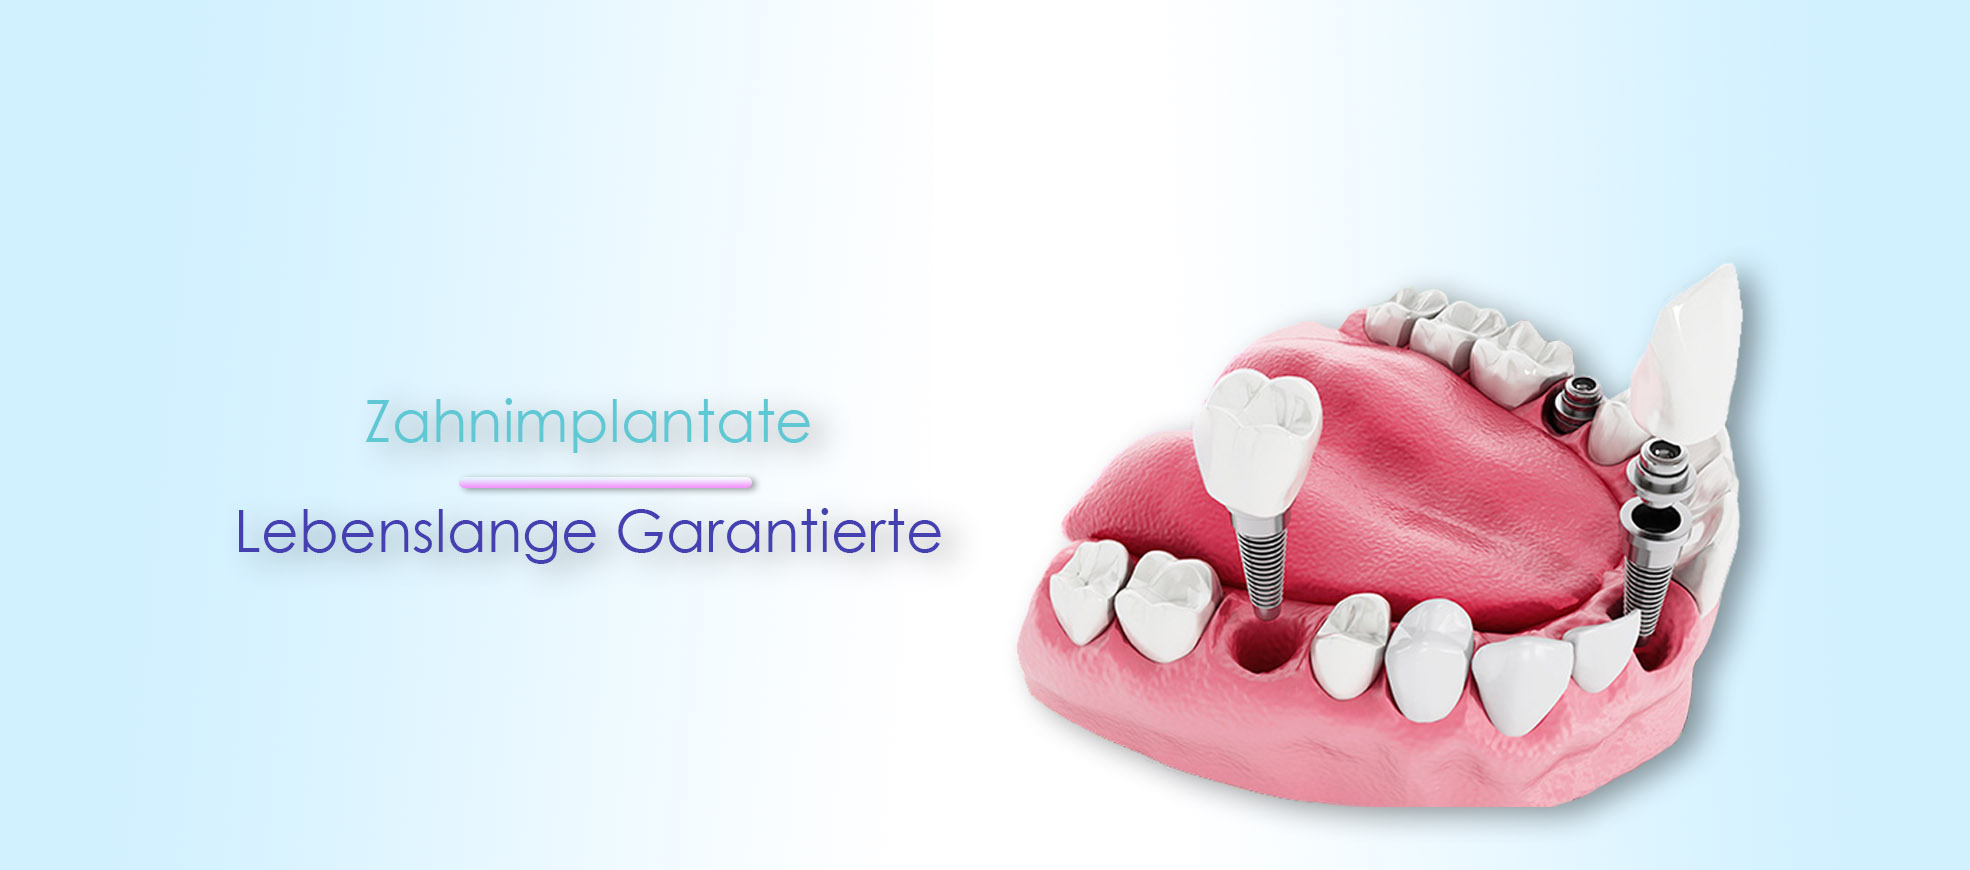 Lebenslange garantierte Zahnimplantate